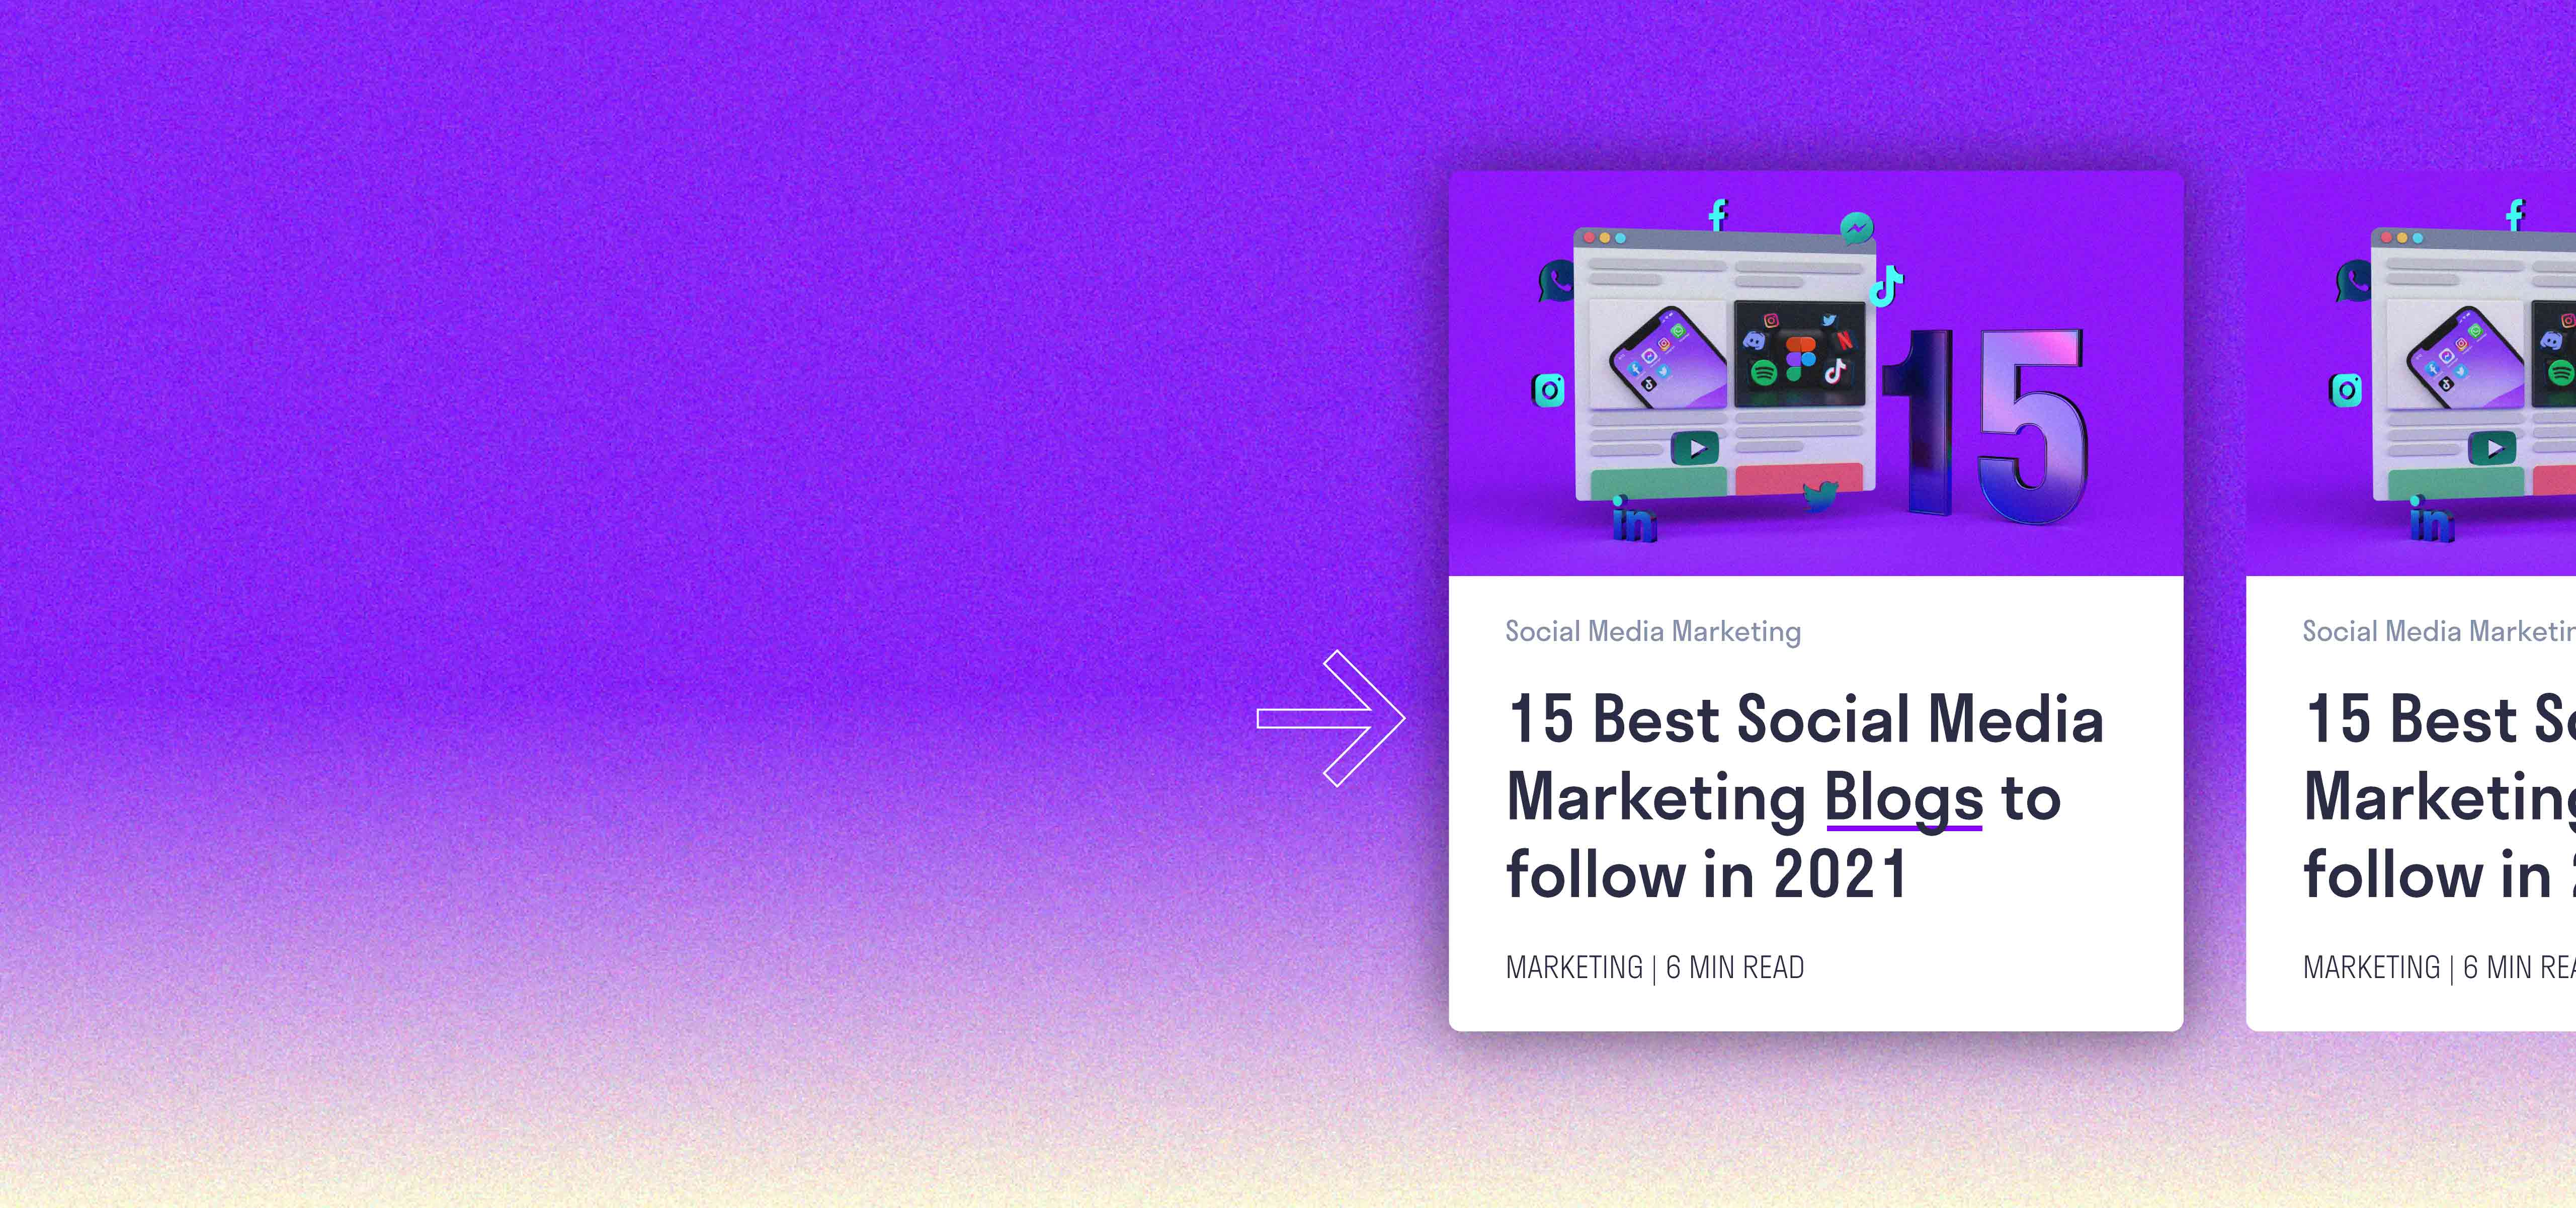 15 Best Social Media Marketing Blogs to Follow in 2021 - Falcon.io